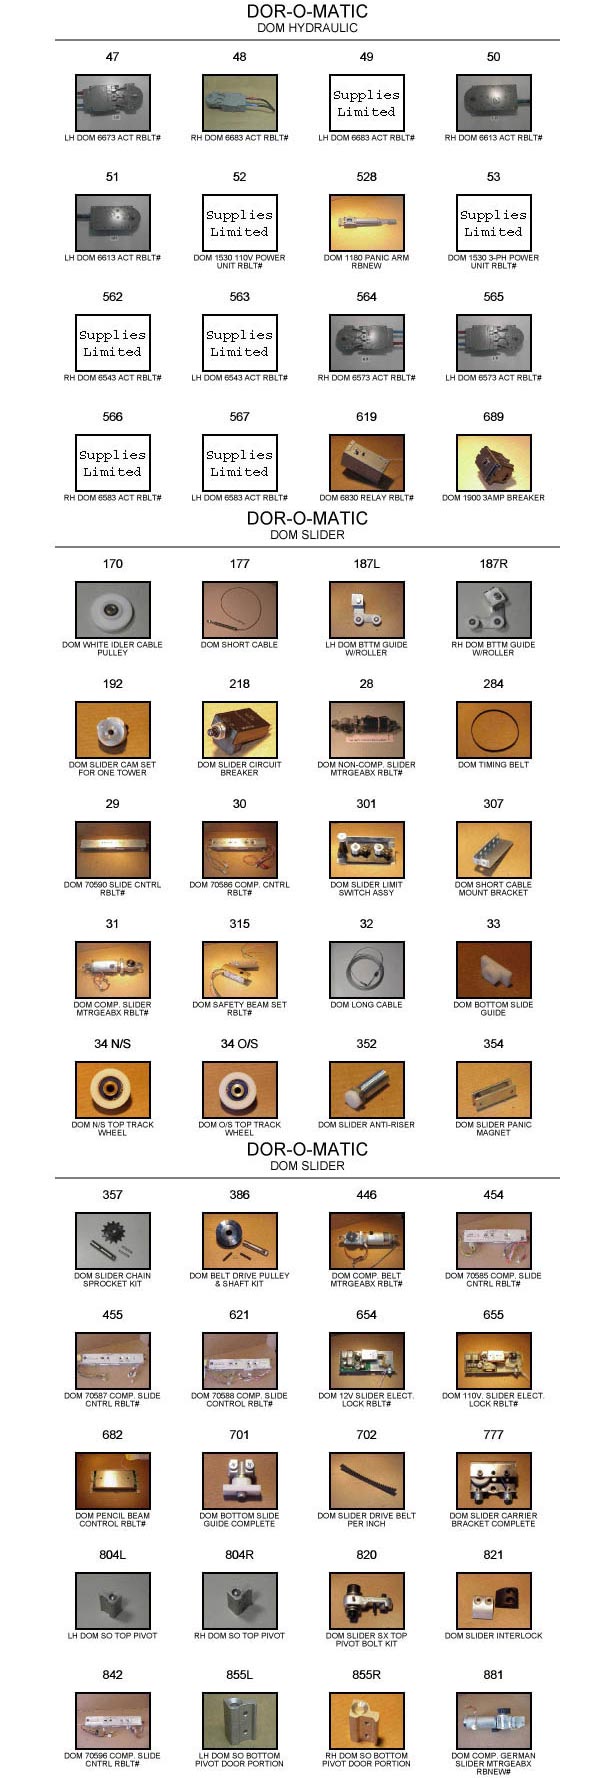 Dor-O-Matic automatic door replacement parts catalog 2